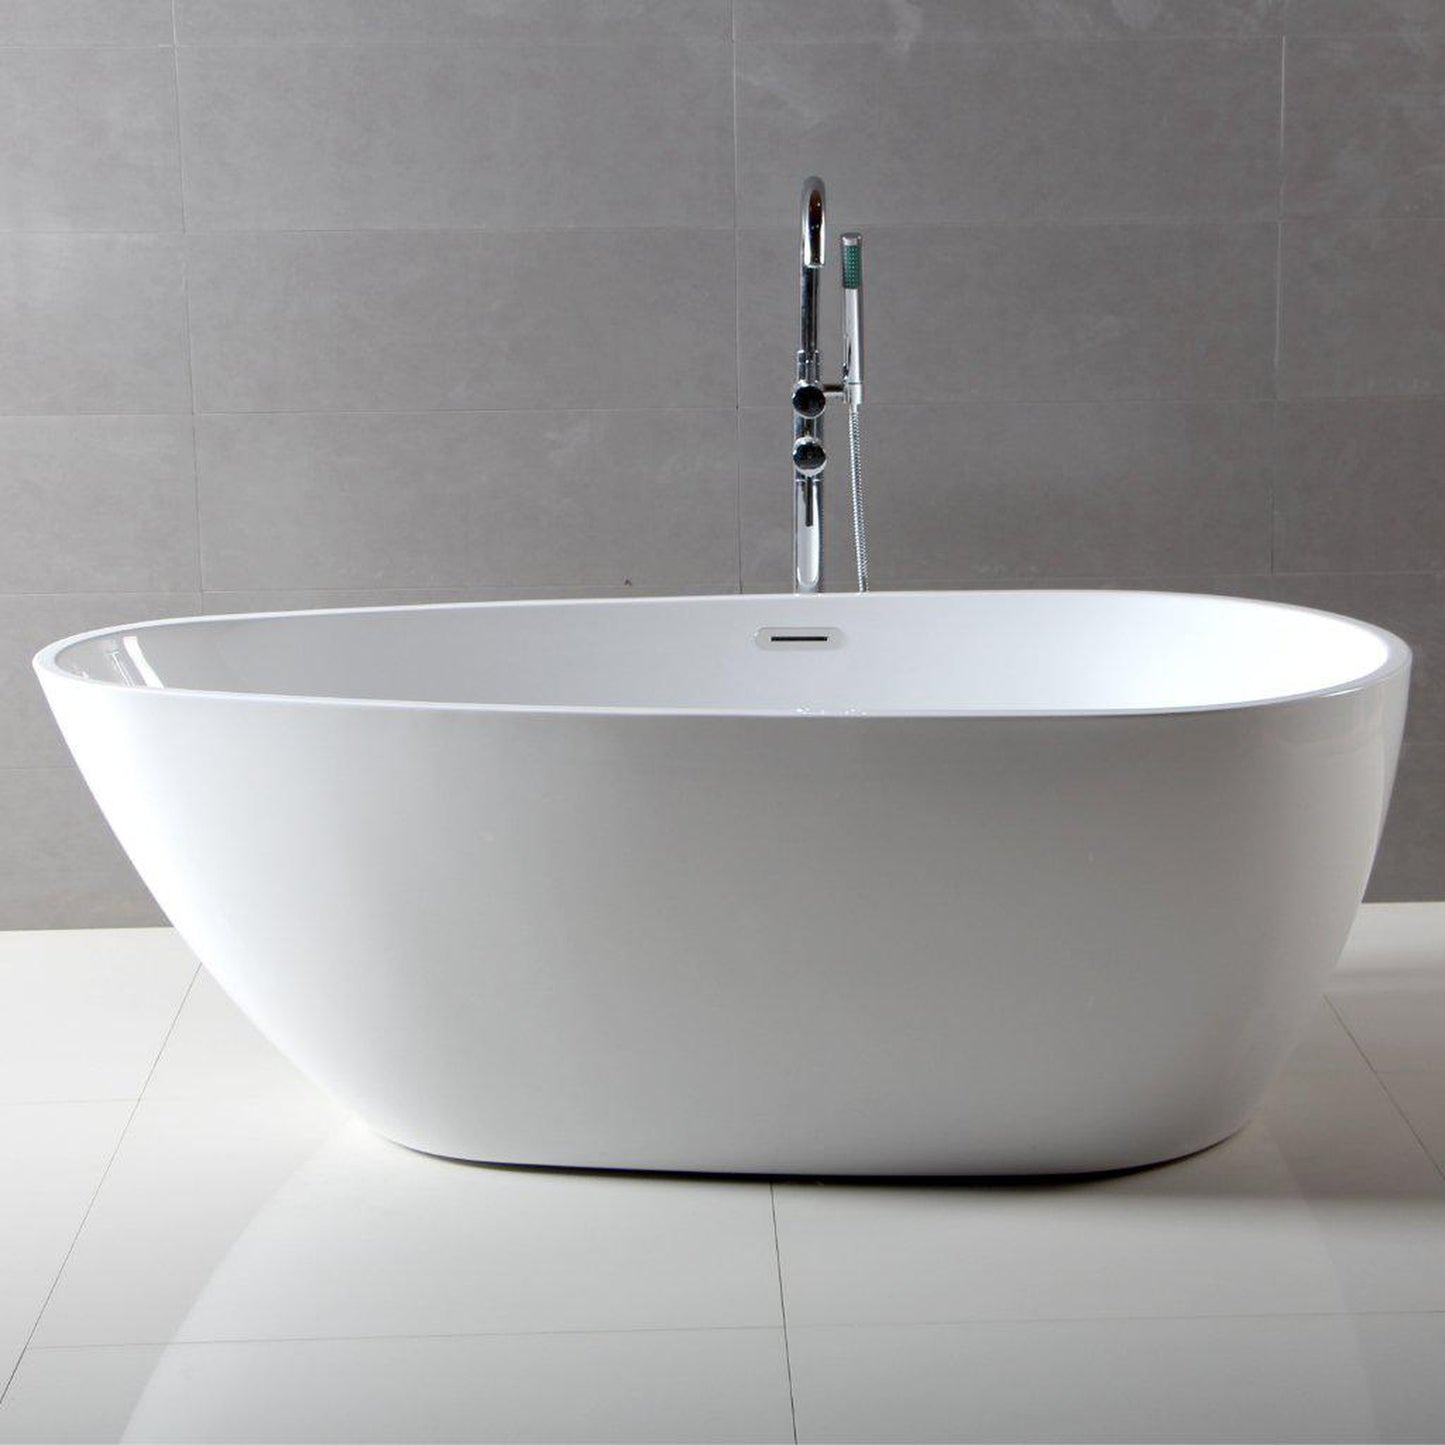 ALFI Brand AB8861 59" One Person Freestanding White Oval Acrylic Soaking Bathtub